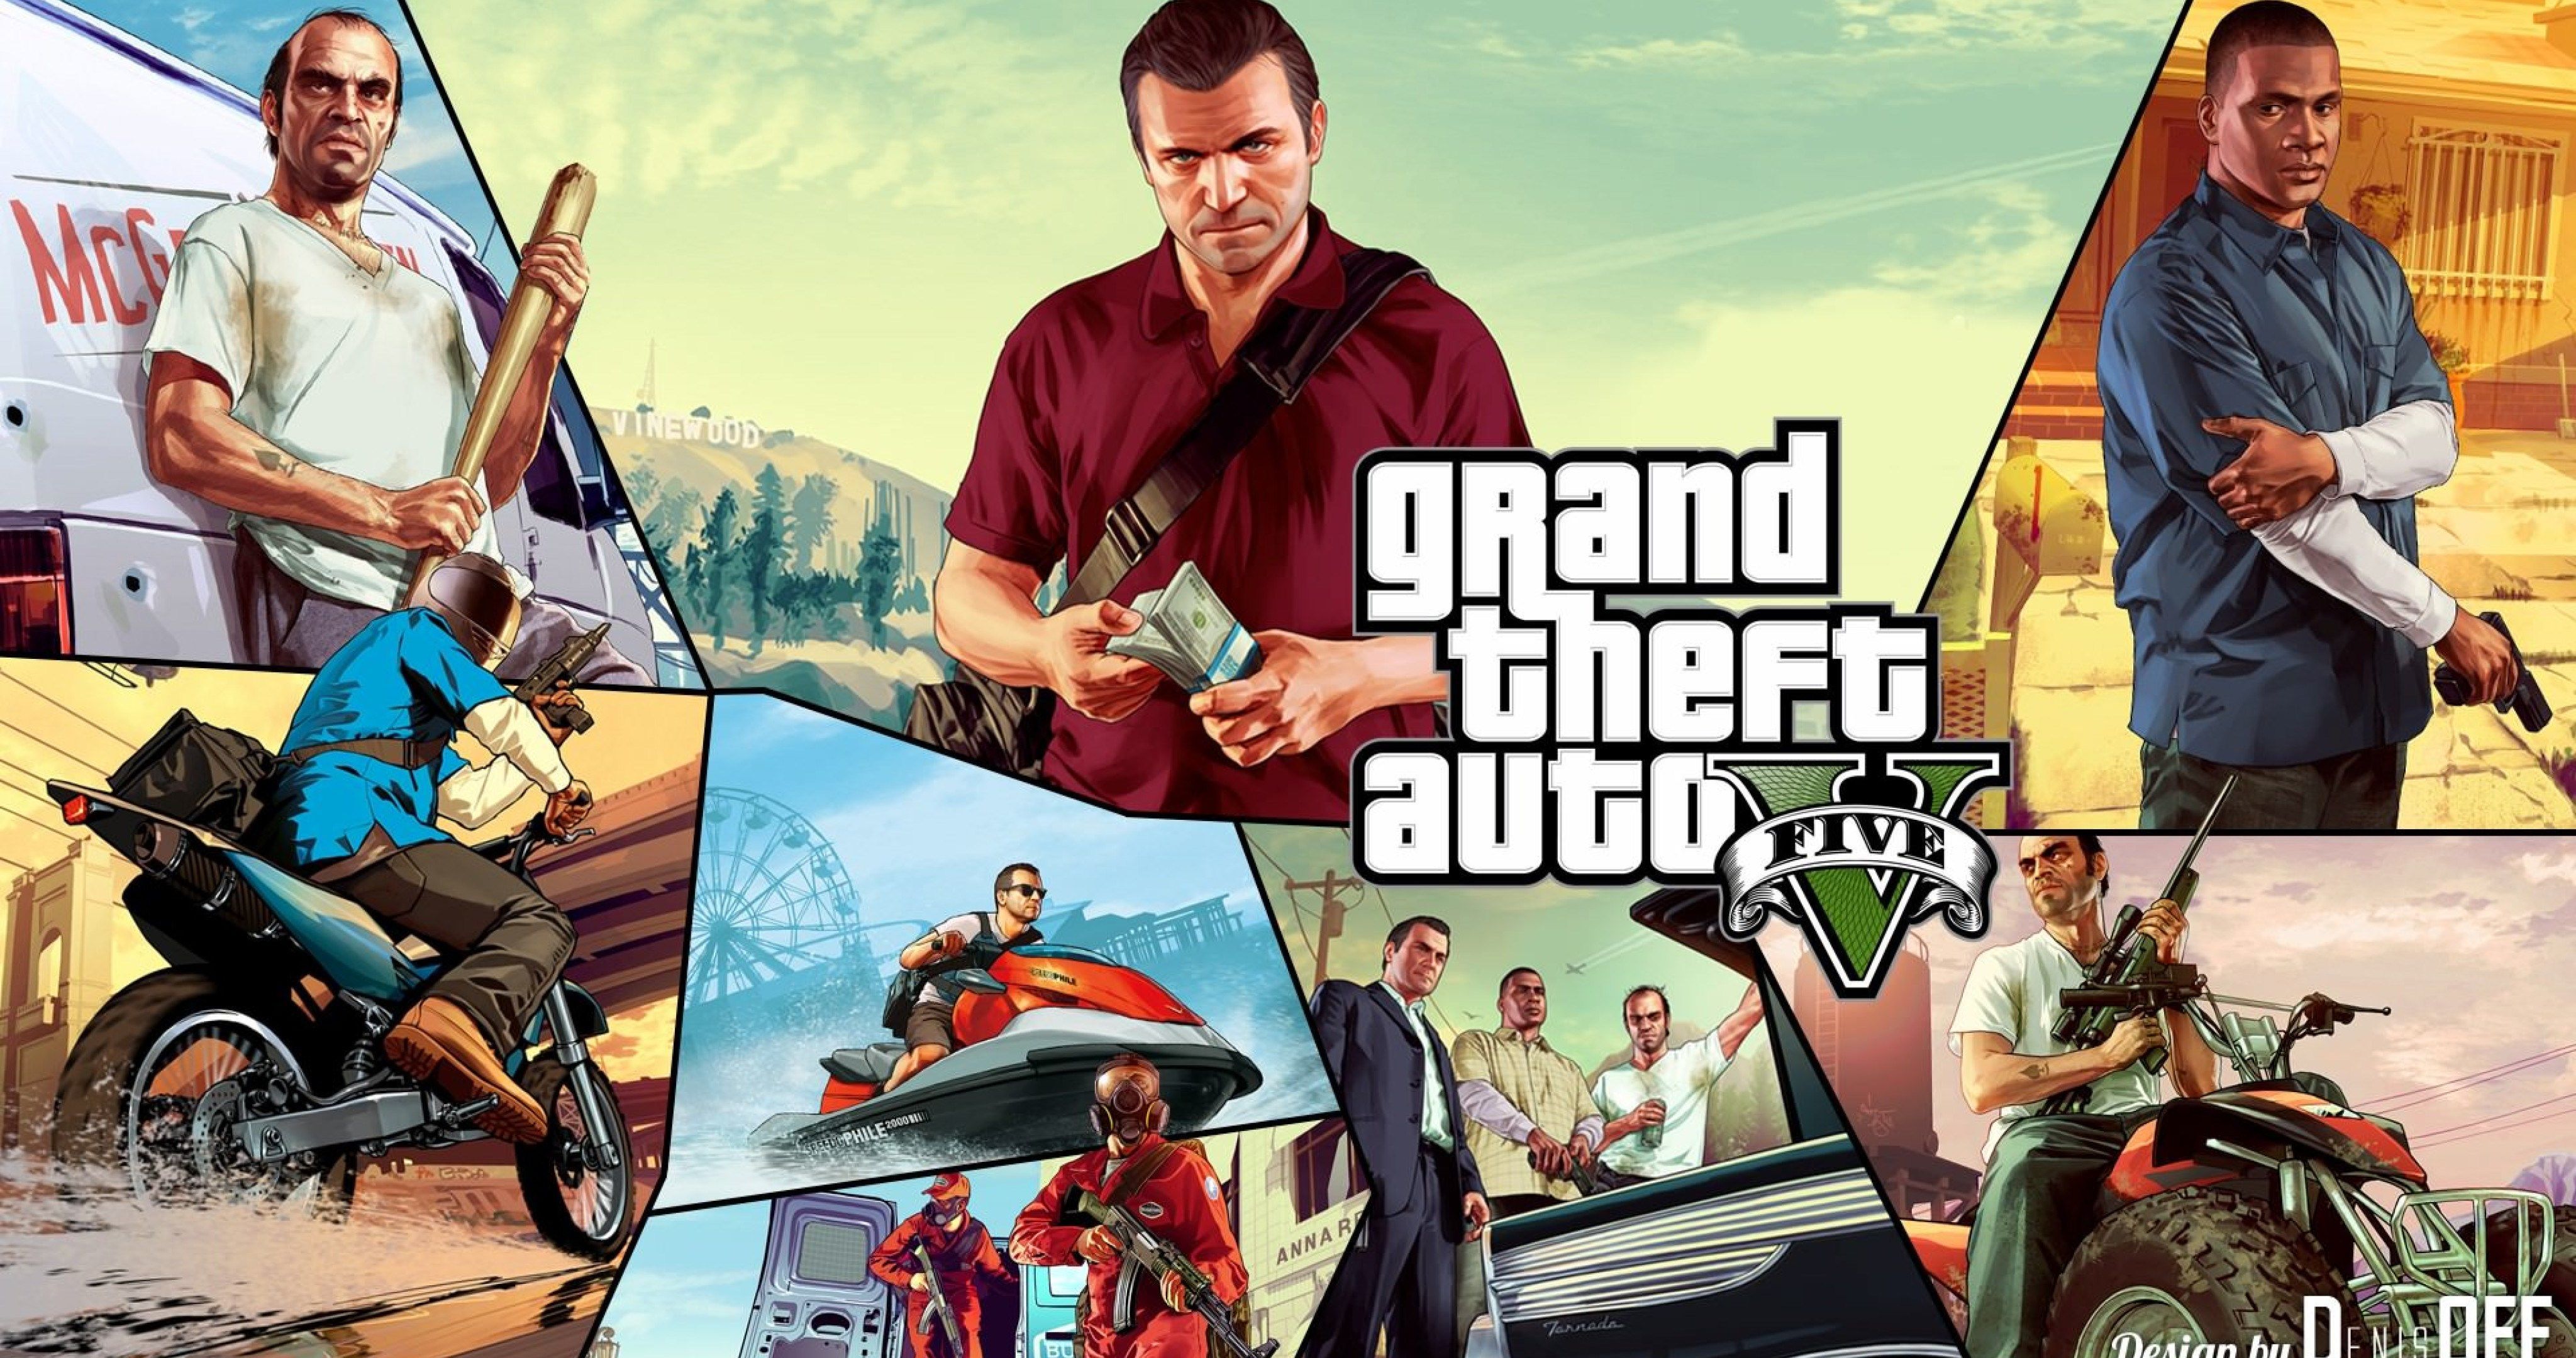 Grand Theft Auto V 4k Wallpaper Picture .com